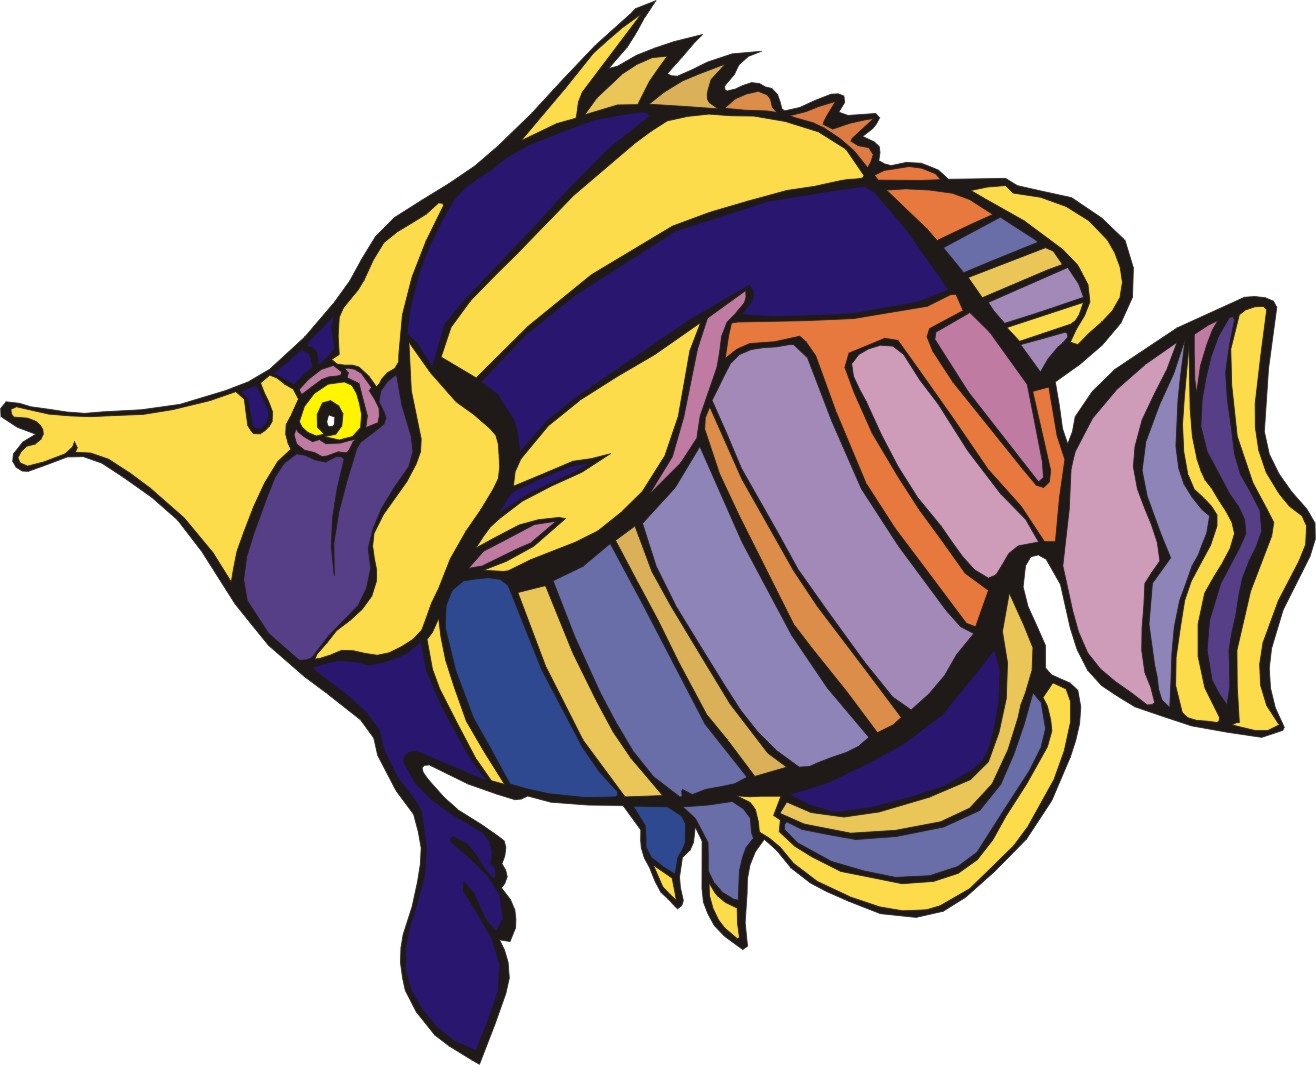 Fish Cartoon Clip Art - ClipArt Best